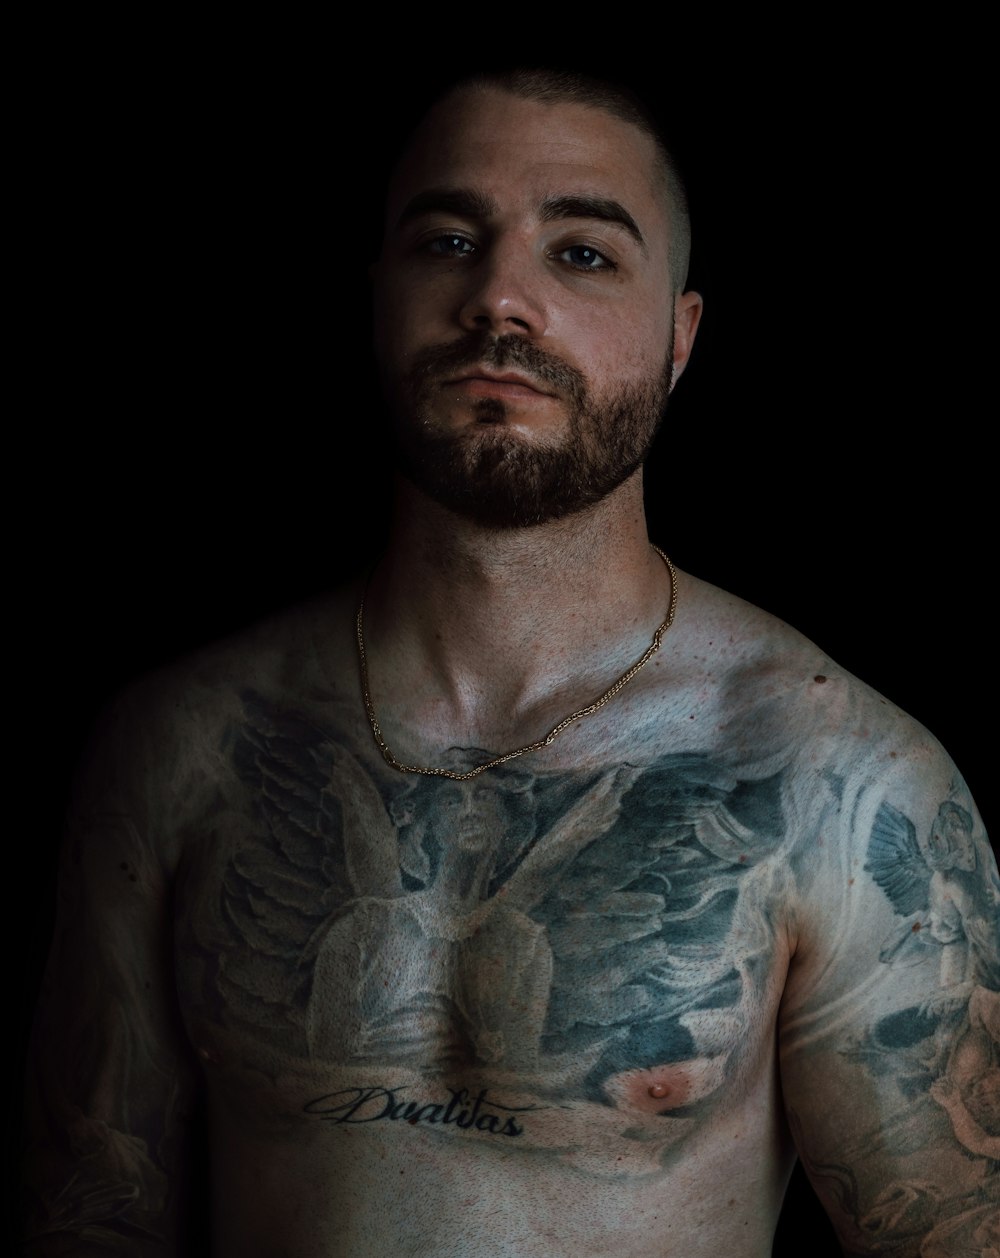 man with white and blue body tattoo photo – Free Black Image on Unsplash